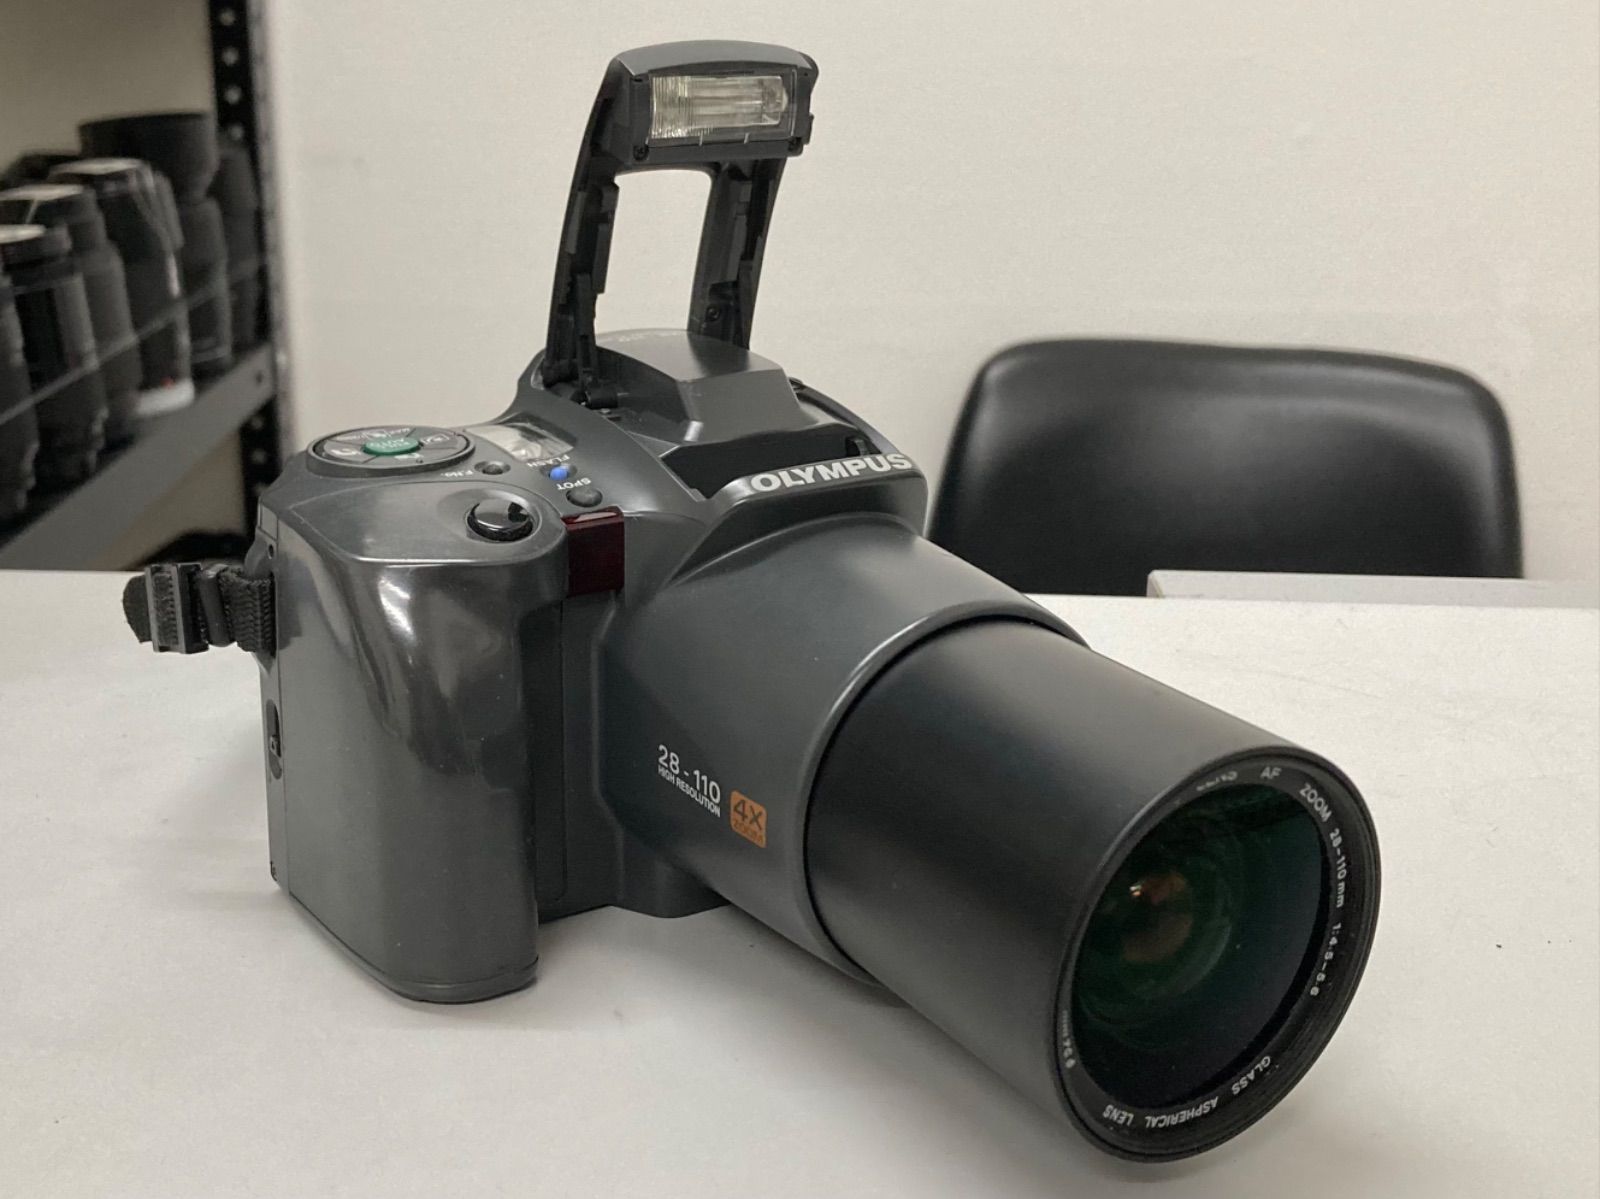 OLYMPUS L-10 28-110mm フィルムカメラ ストラップ付き - フィルムカメラ